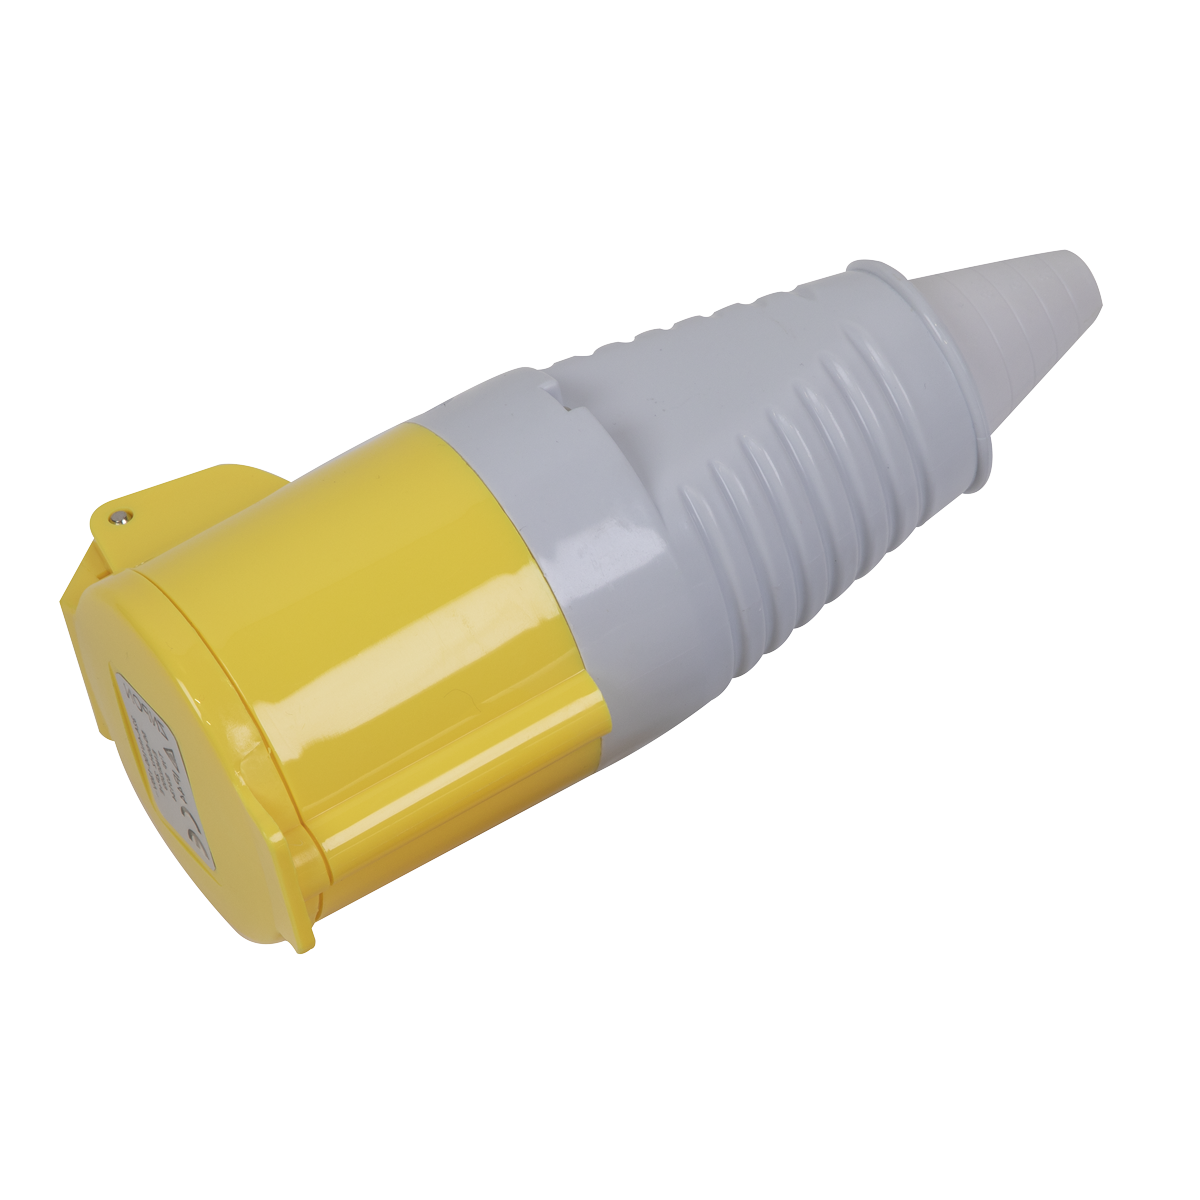 Sealey WC11016 Yellow Socket 110V 16A